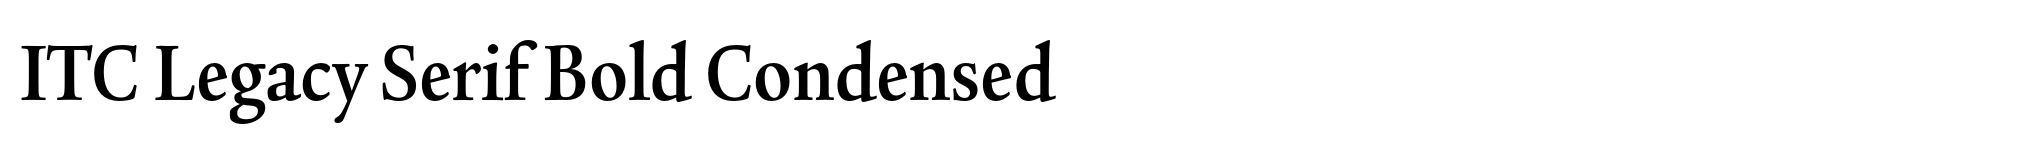 ITC Legacy Serif Bold Condensed image